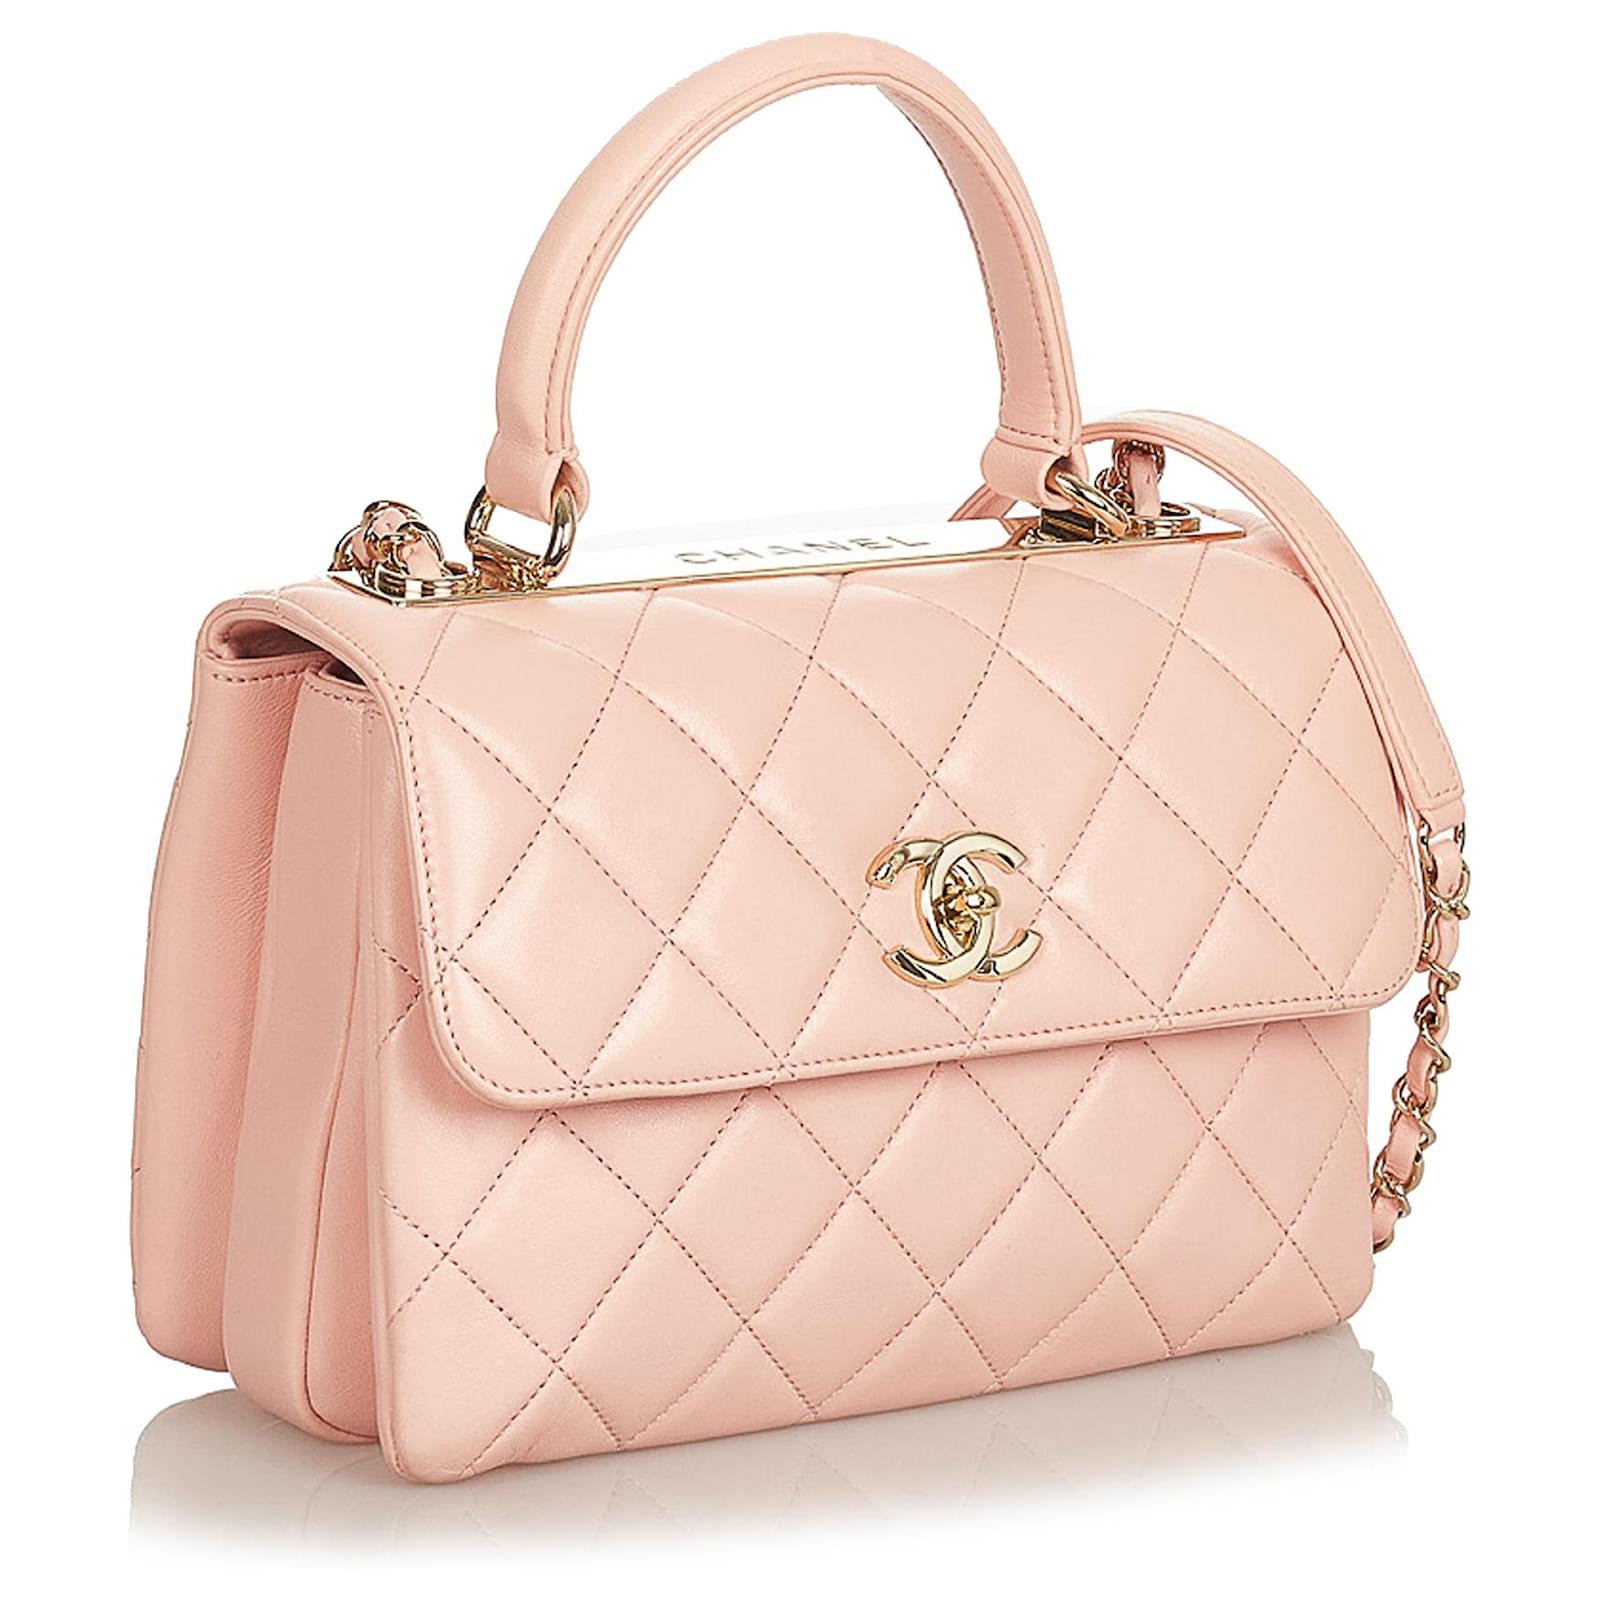 Chanel Pink Iridescent Caviar Small Coco Handle Flap Bag